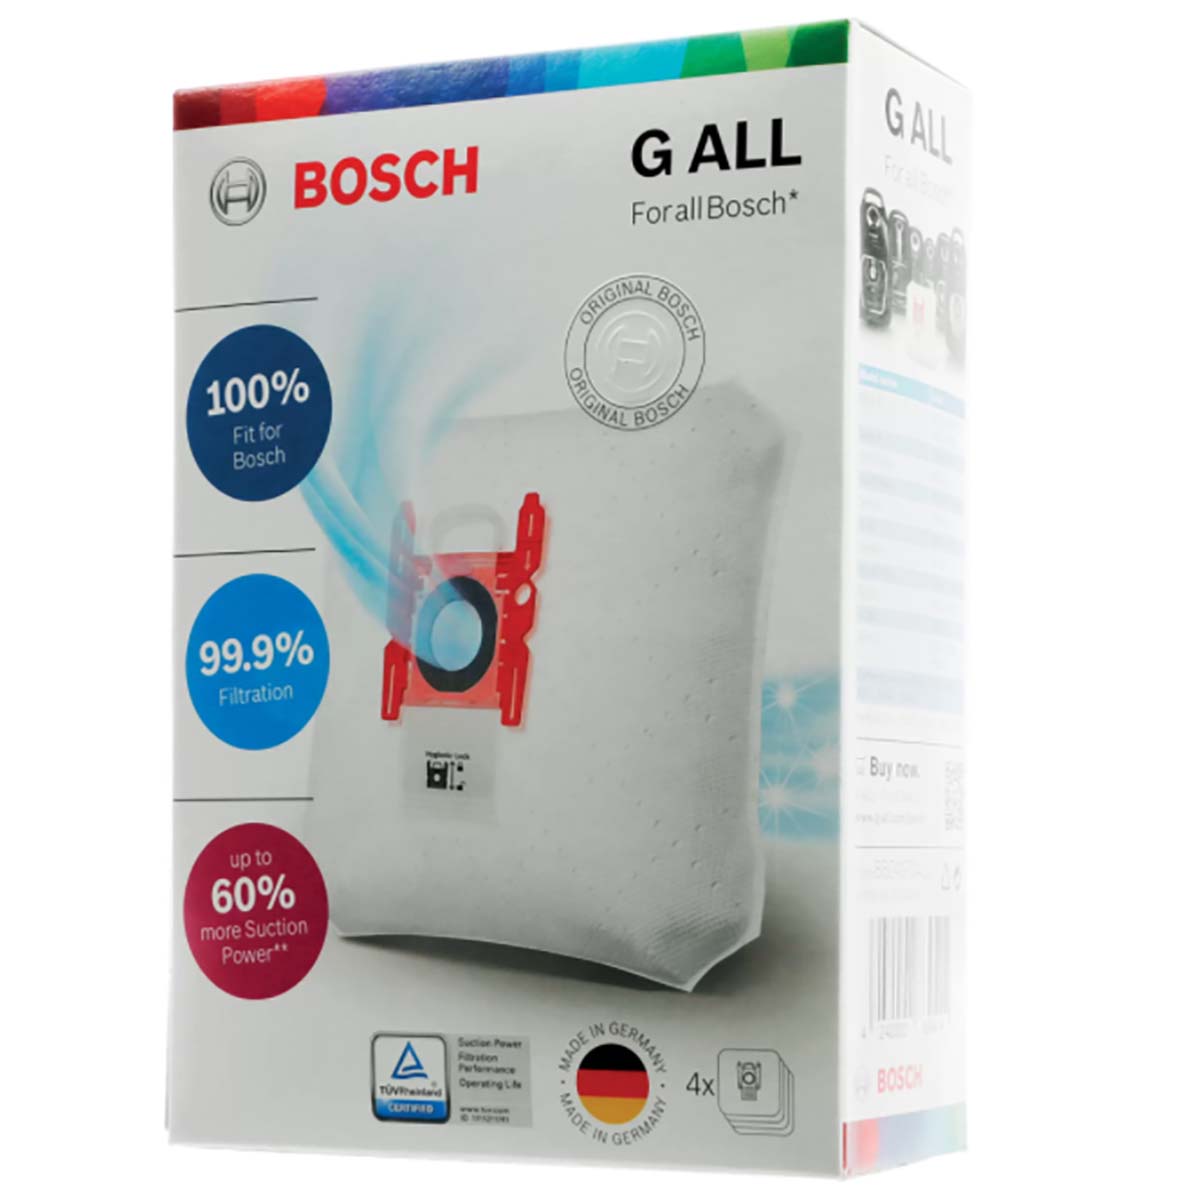 Bosch Original Microfibre Type G ALL Dust Bags BBZ41FGALL 8 Pack 